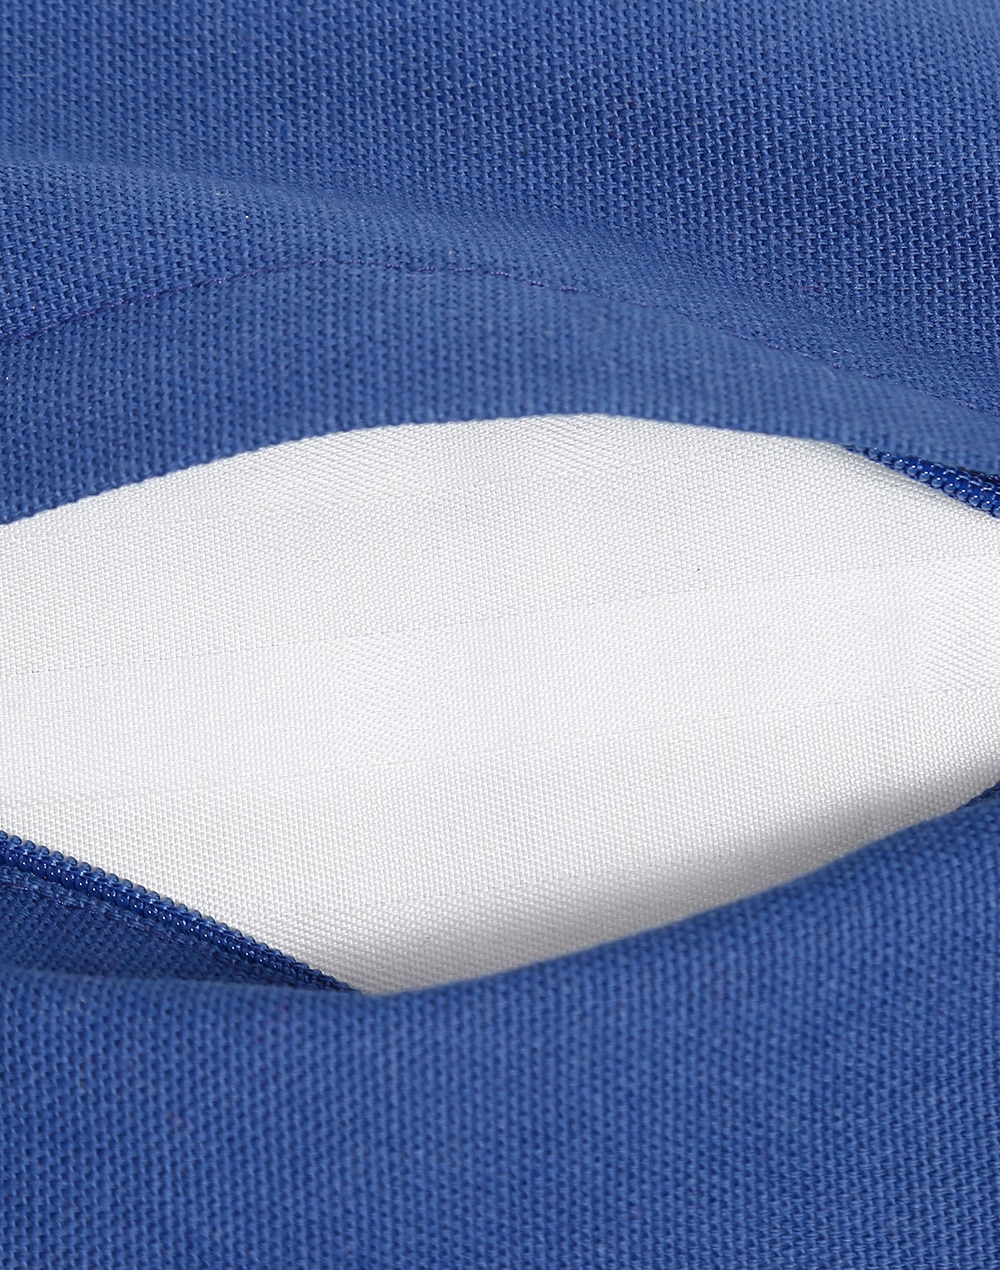 Pashav Cotton Printed Cushion Cover